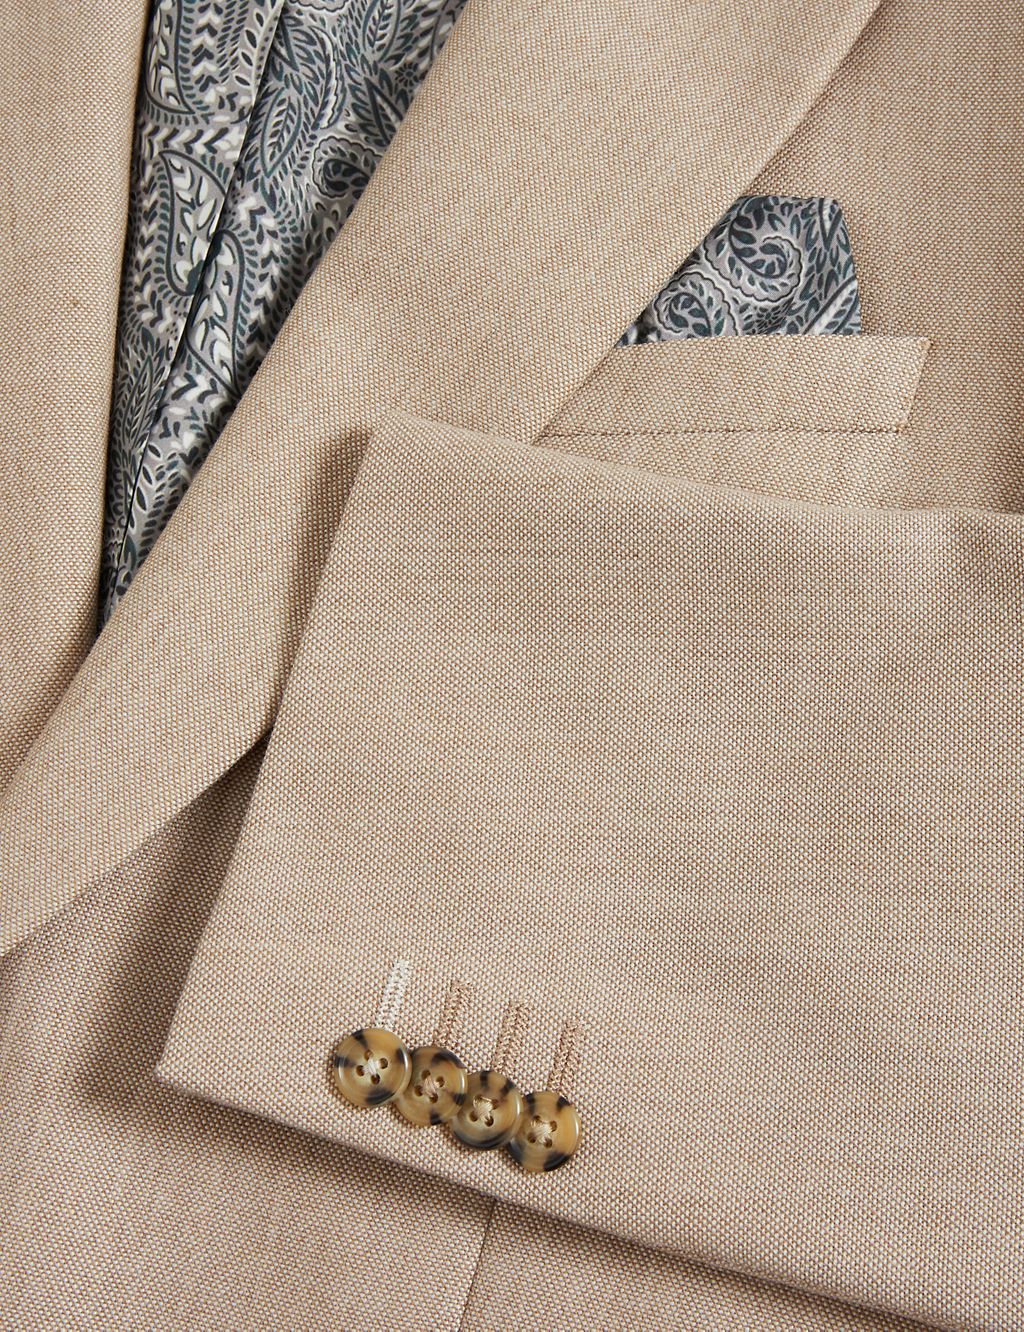 Regular Fit Wool Blend Textured Suit Jacket 5 of 7